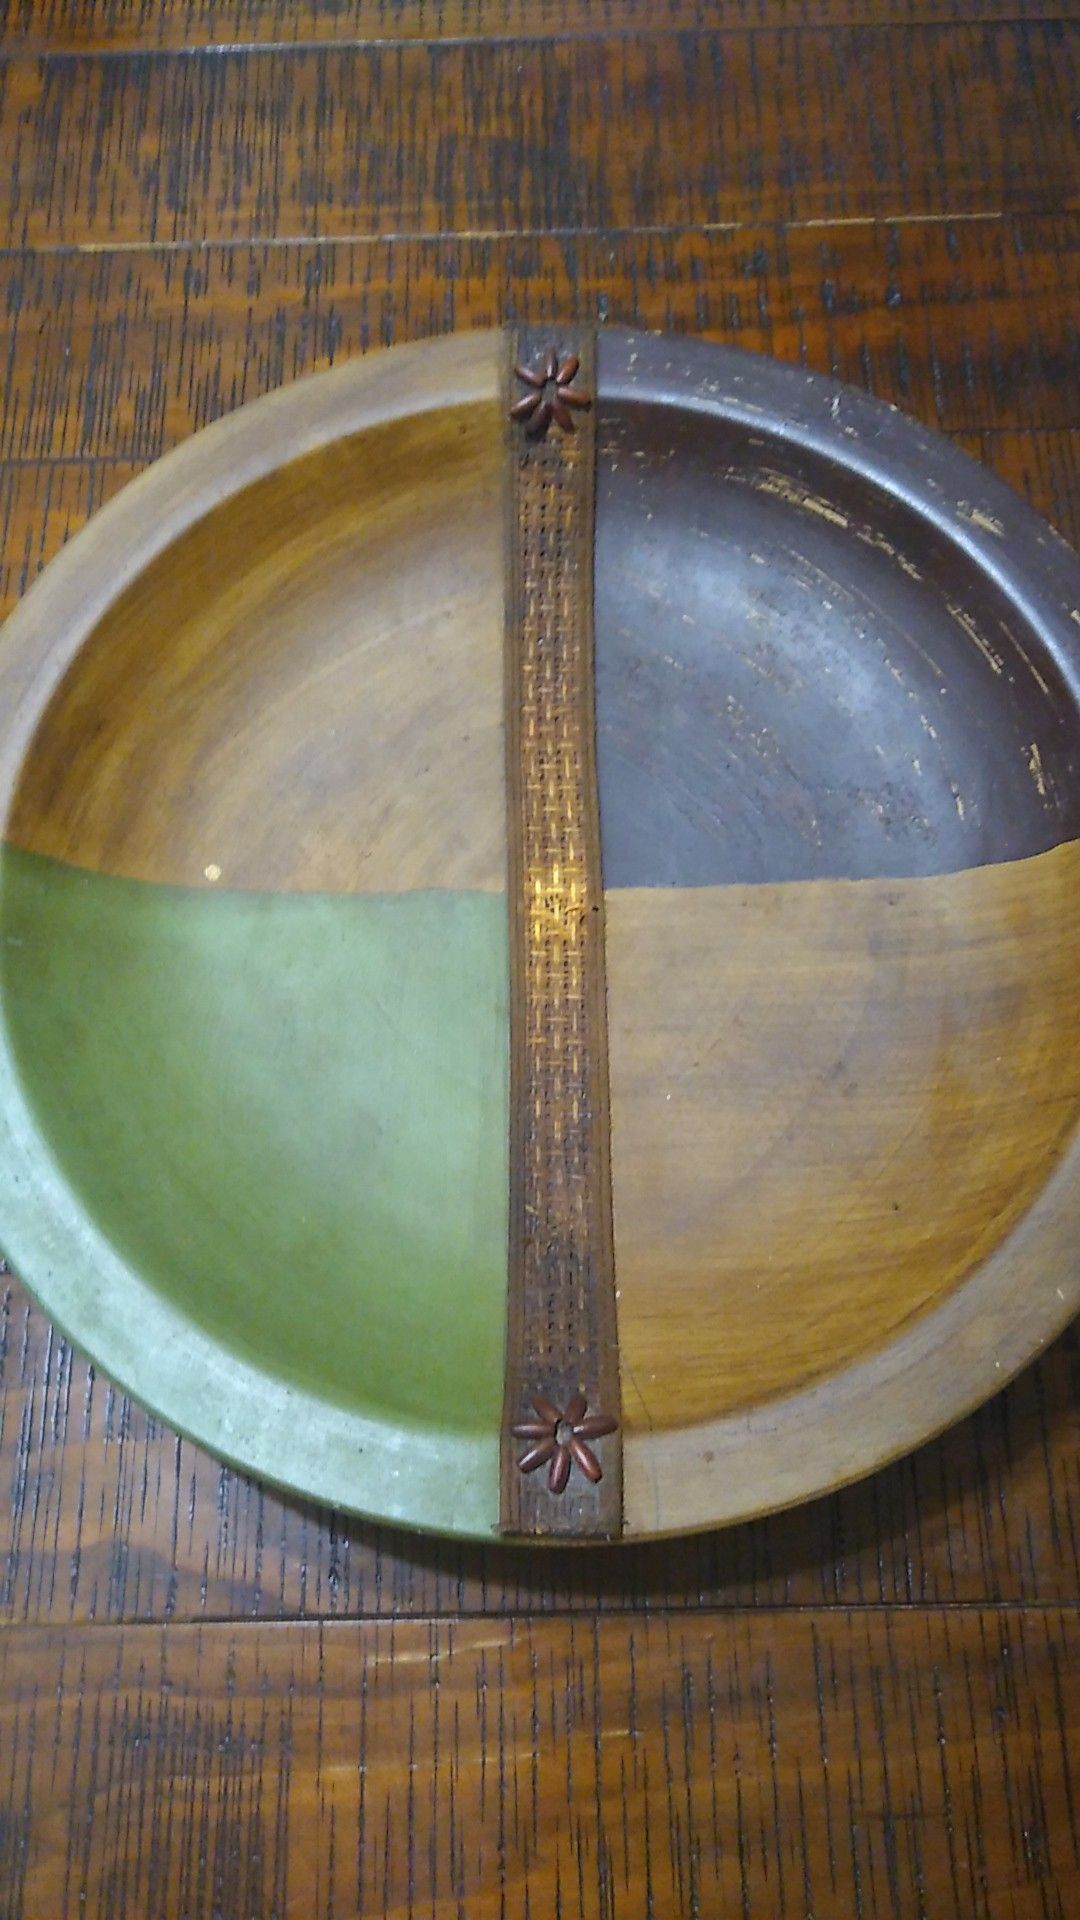 Large Decorative Bowl